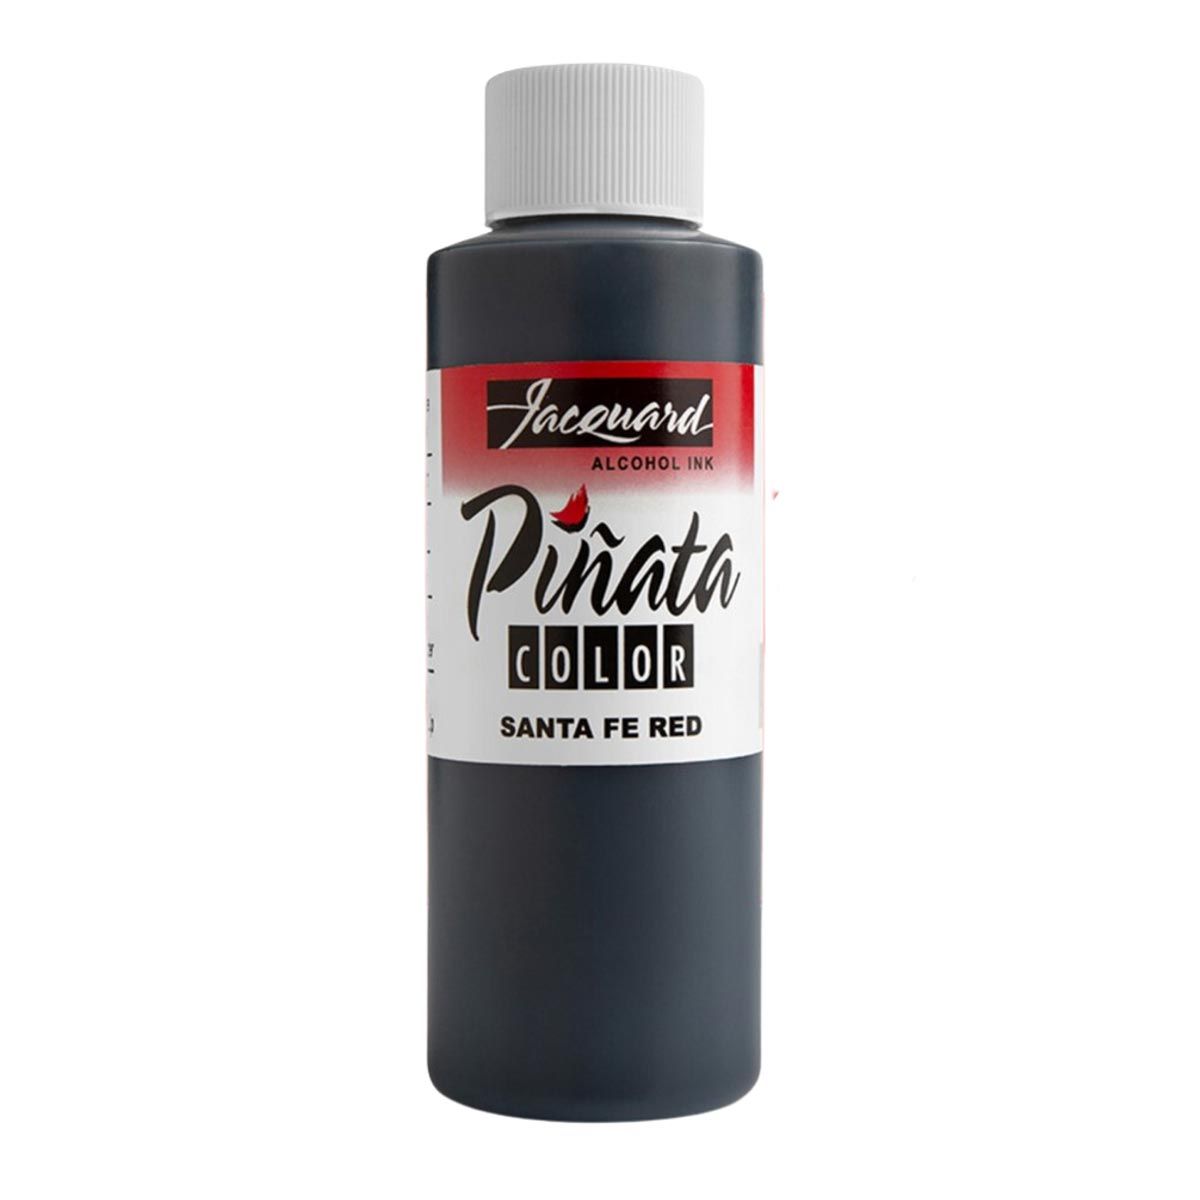 Piñata Color Alcohol Ink - Santa Fe Red 4-ounce